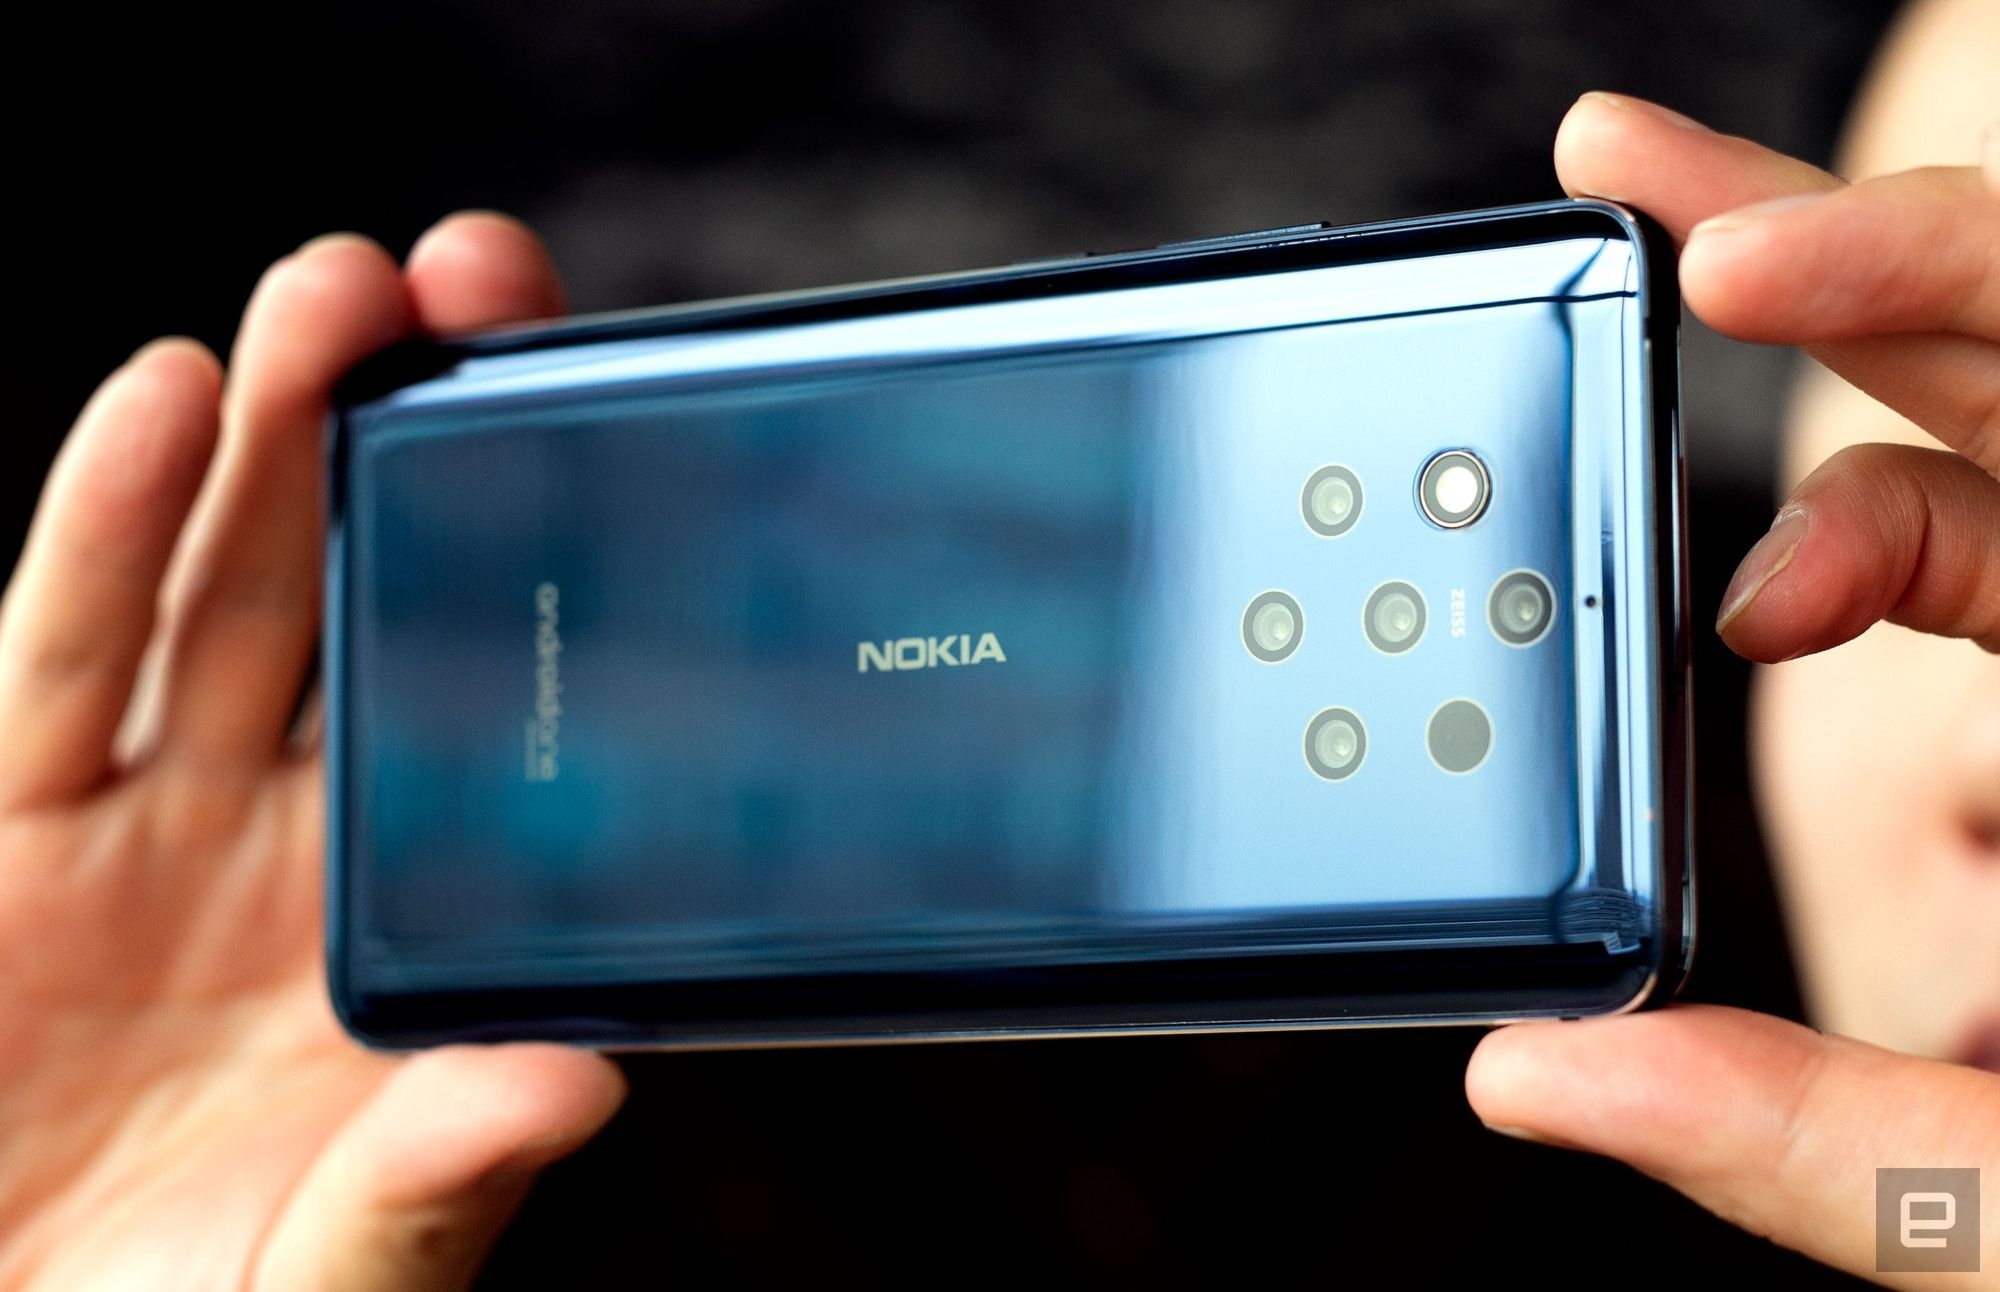 Телефон с 6 камерами. Nokia 9 PUREVIEW. Нокиа с 5 камерами. Nokia 6 камер. Нокиа с 9 камерами.